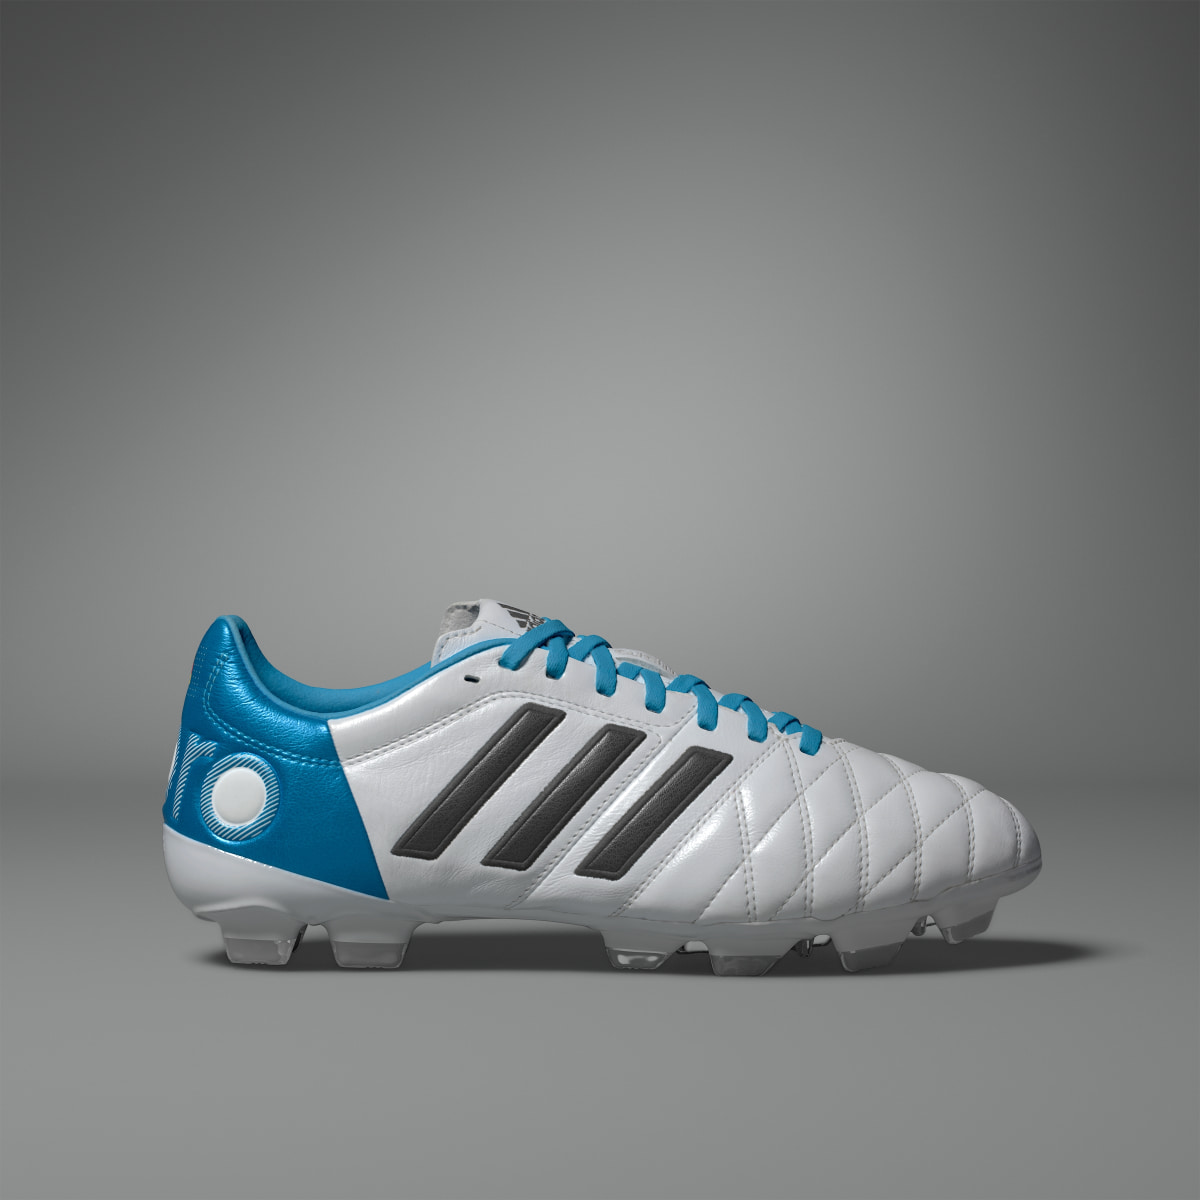 Adidas Botas de Futebol 11Pro Toni Kroos – Piso firme. 4